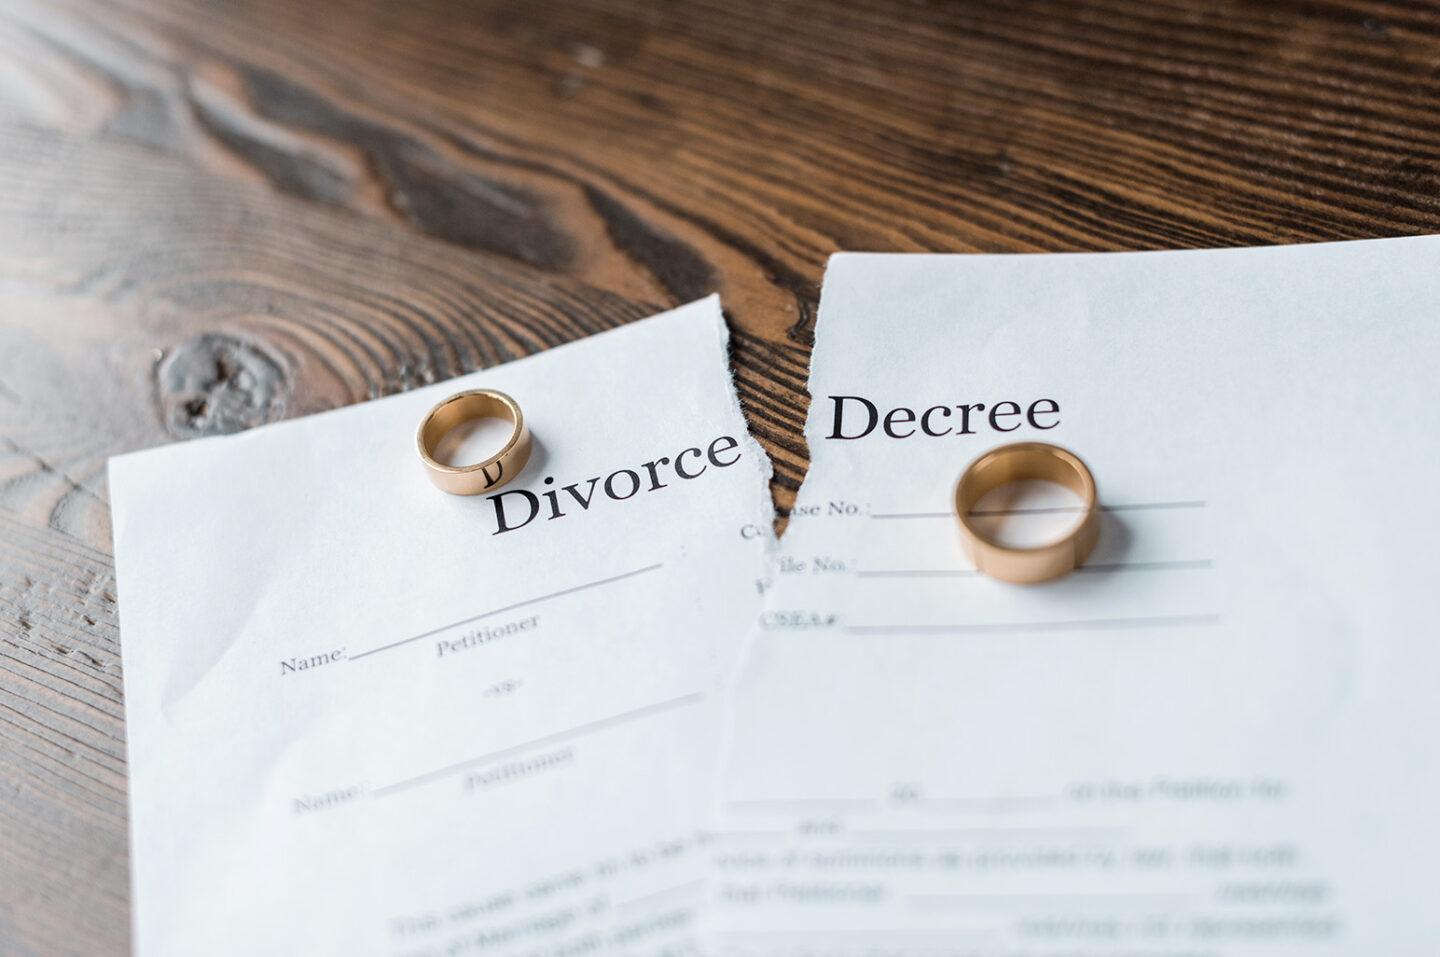 Divorce Decree With Rings